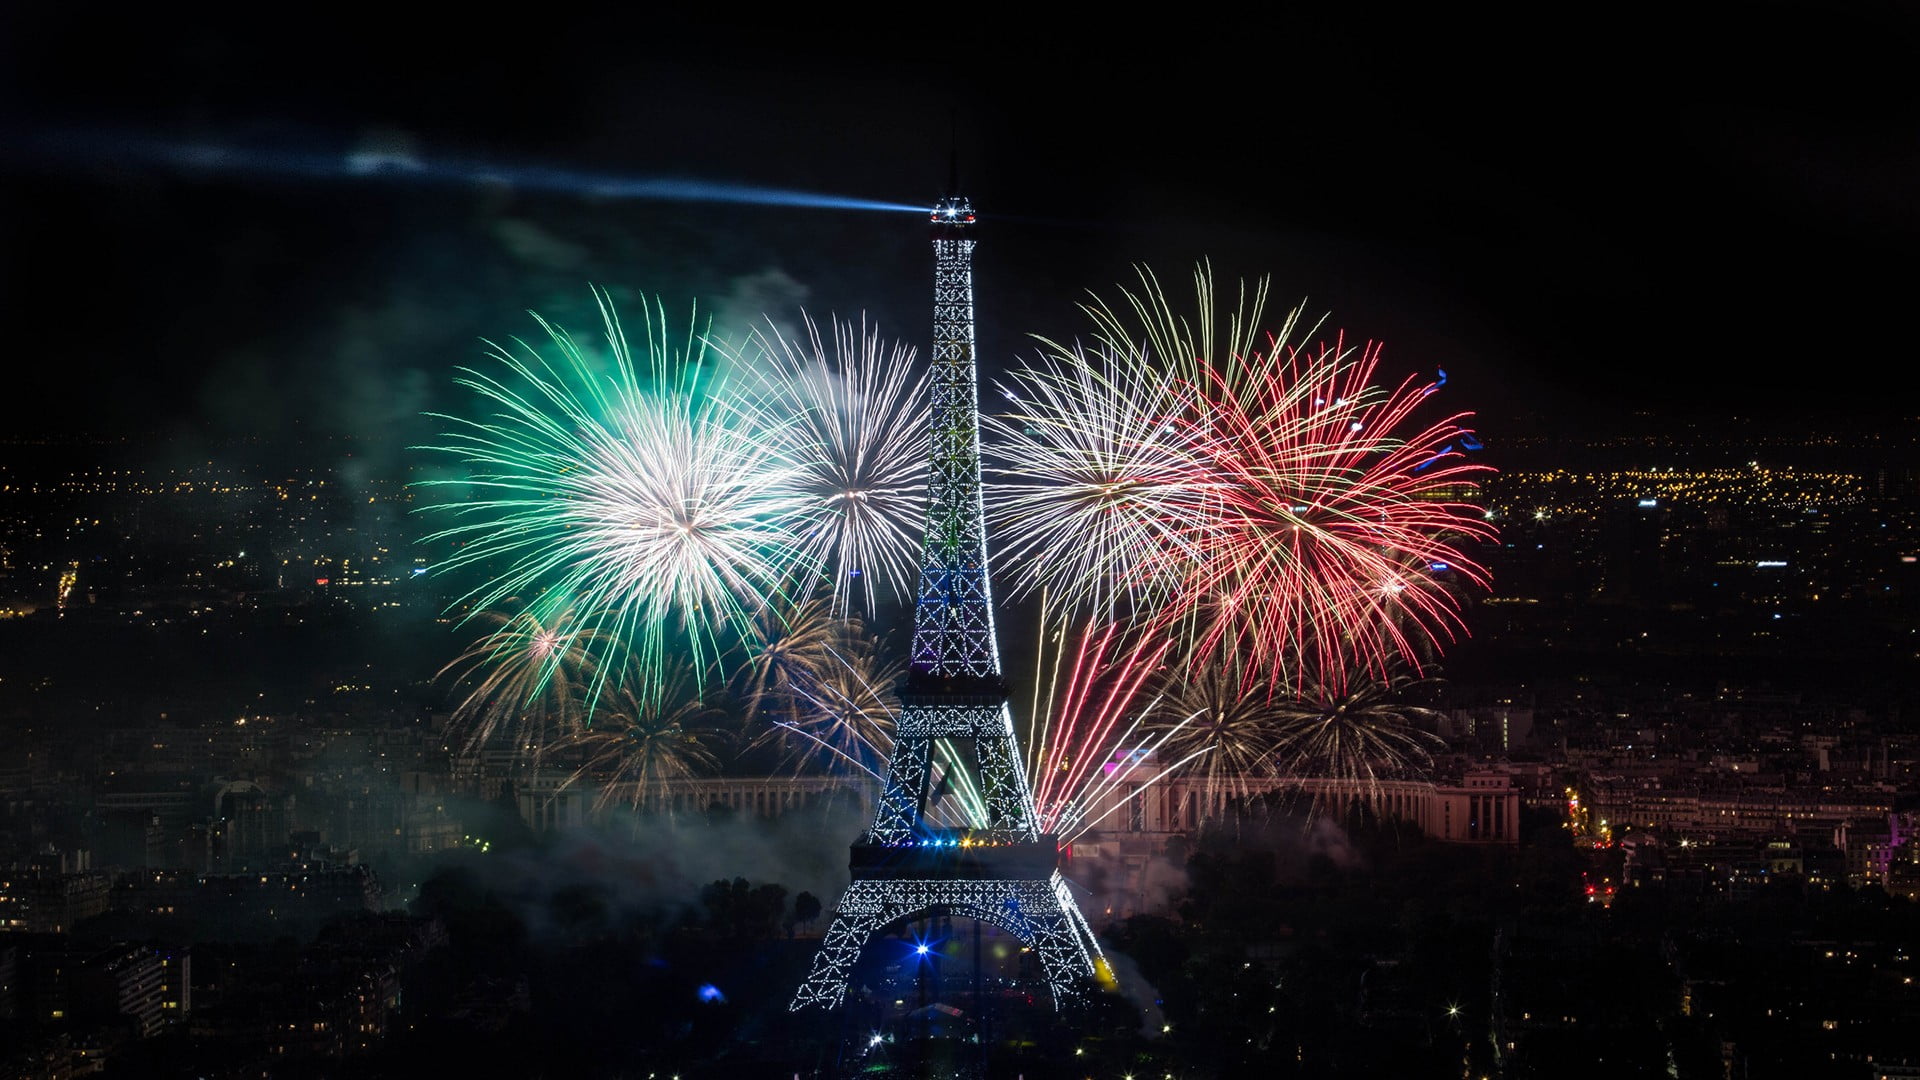 Eiffel Tower, Paris, city, firework, illuminated, night, event